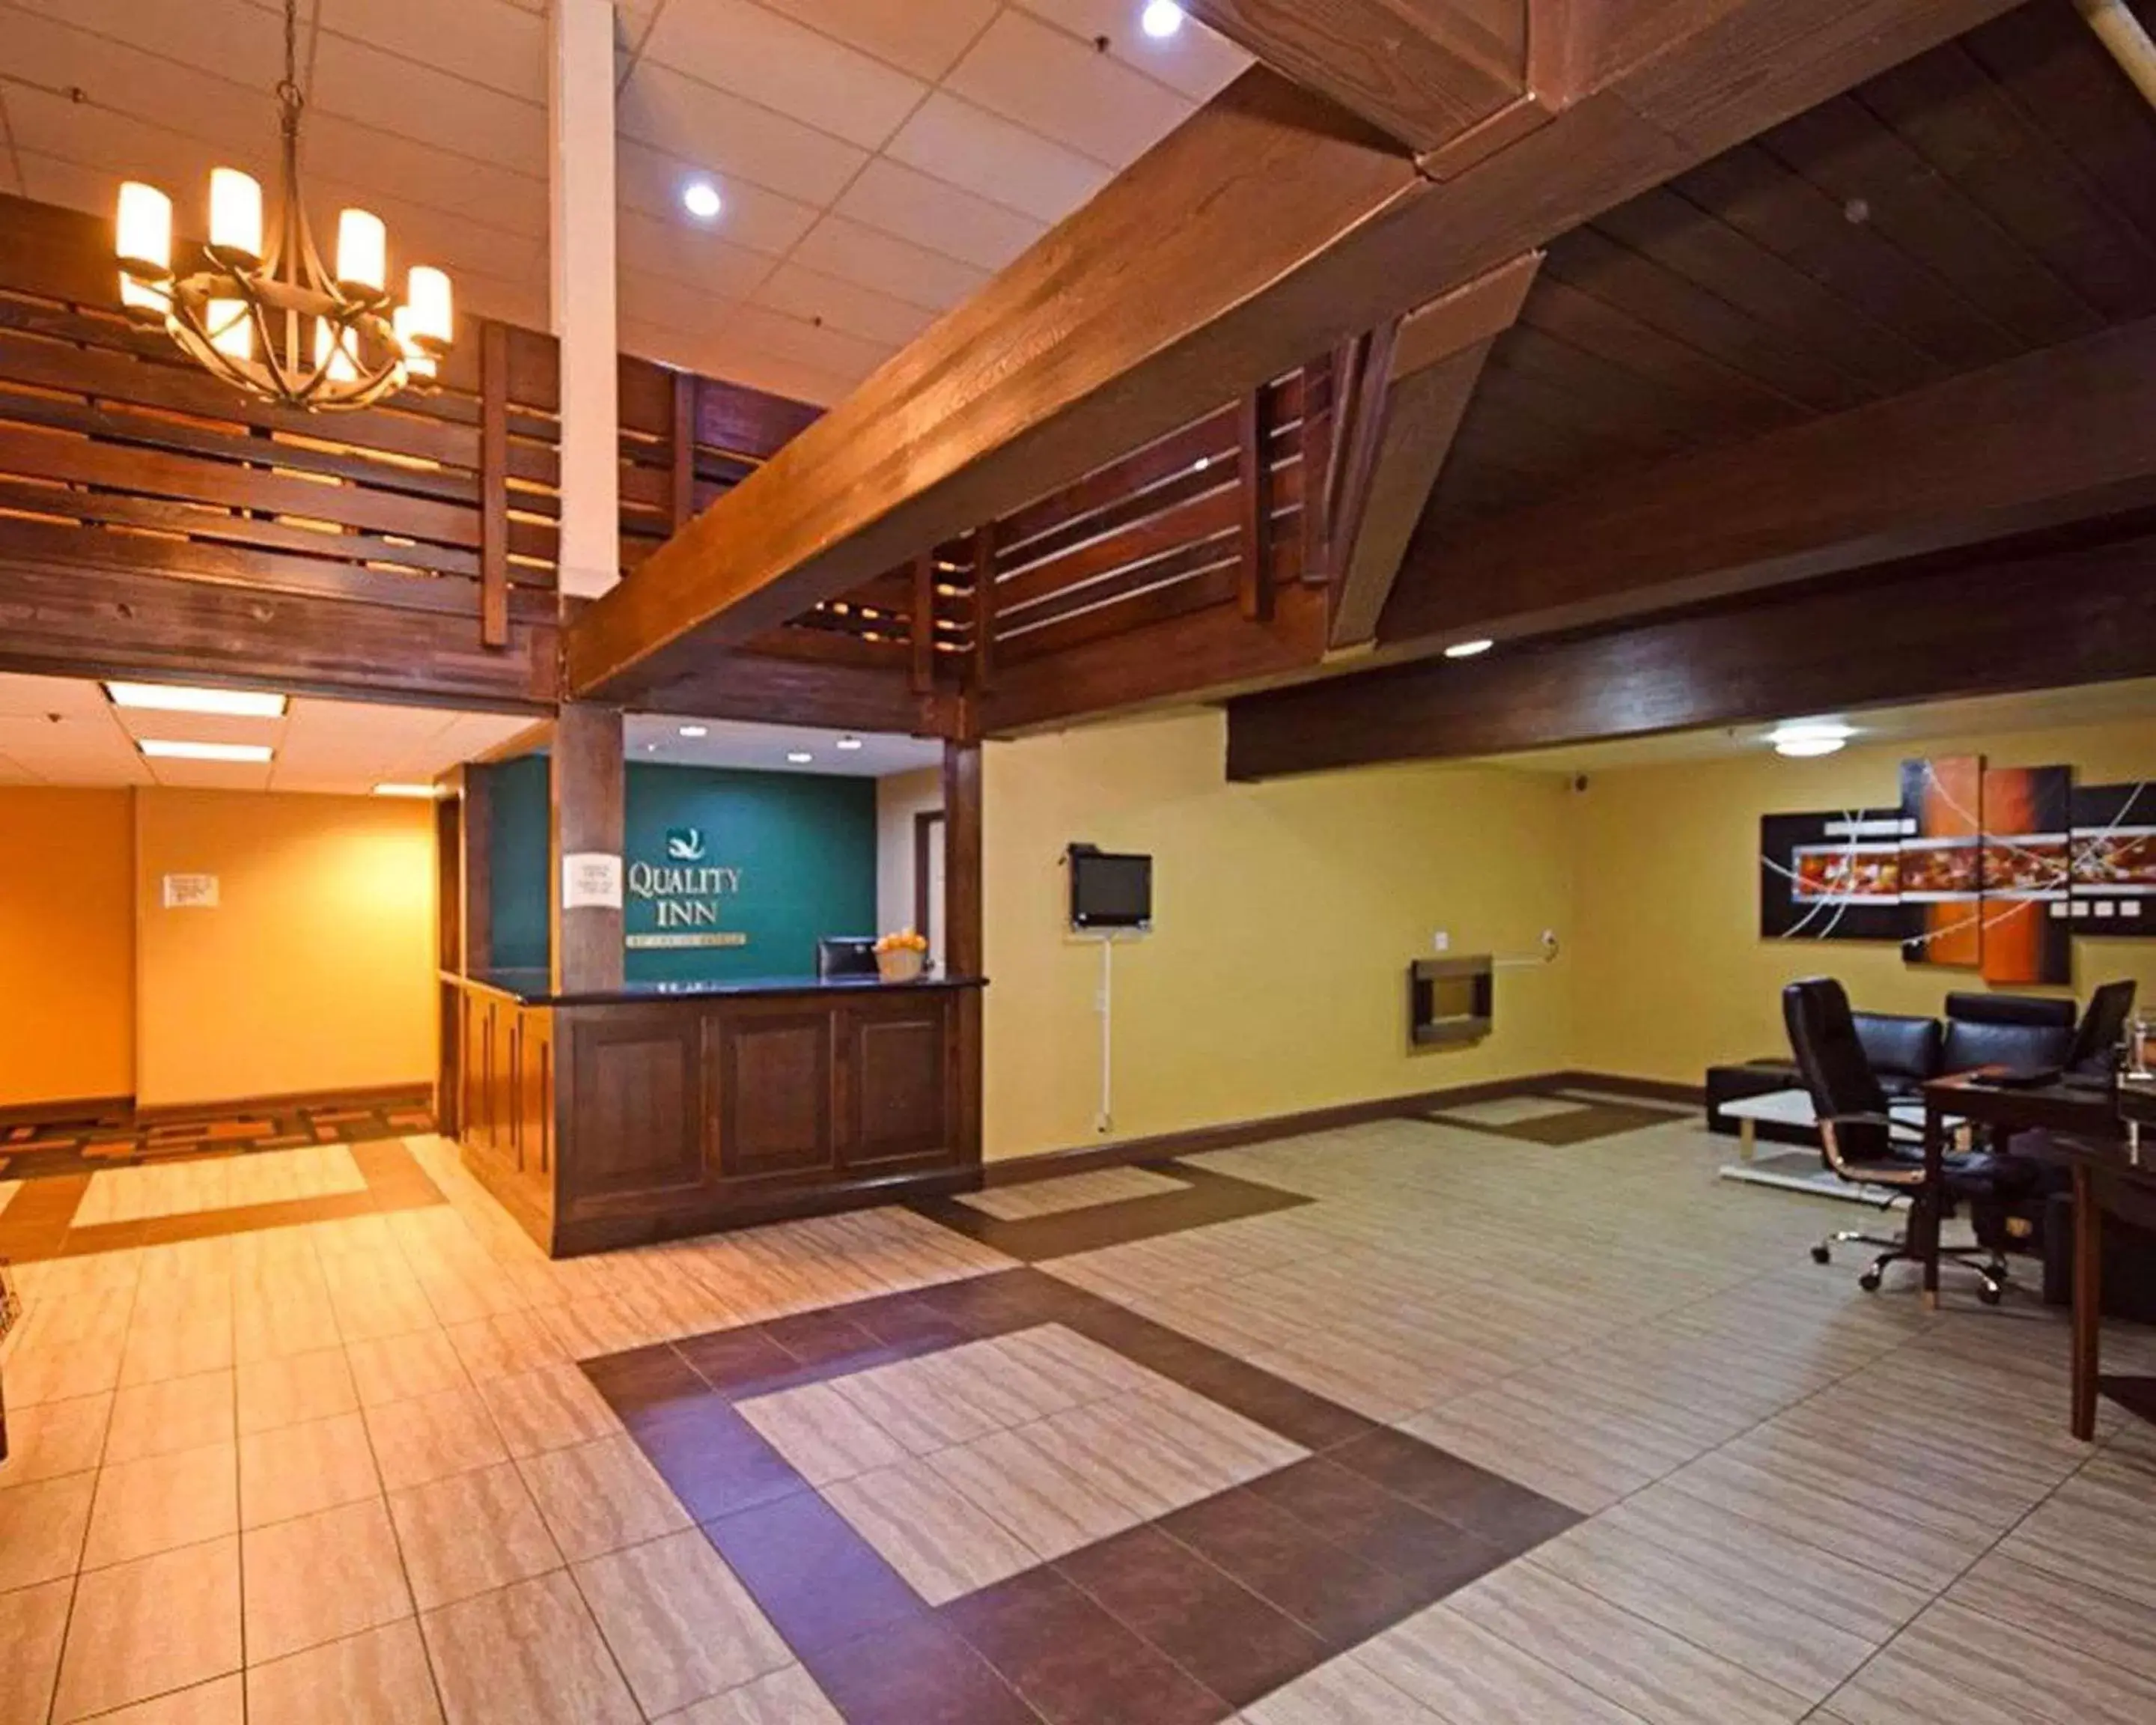 Lobby or reception, Lobby/Reception in Quality Inn near Mammoth Mountain Ski Resort